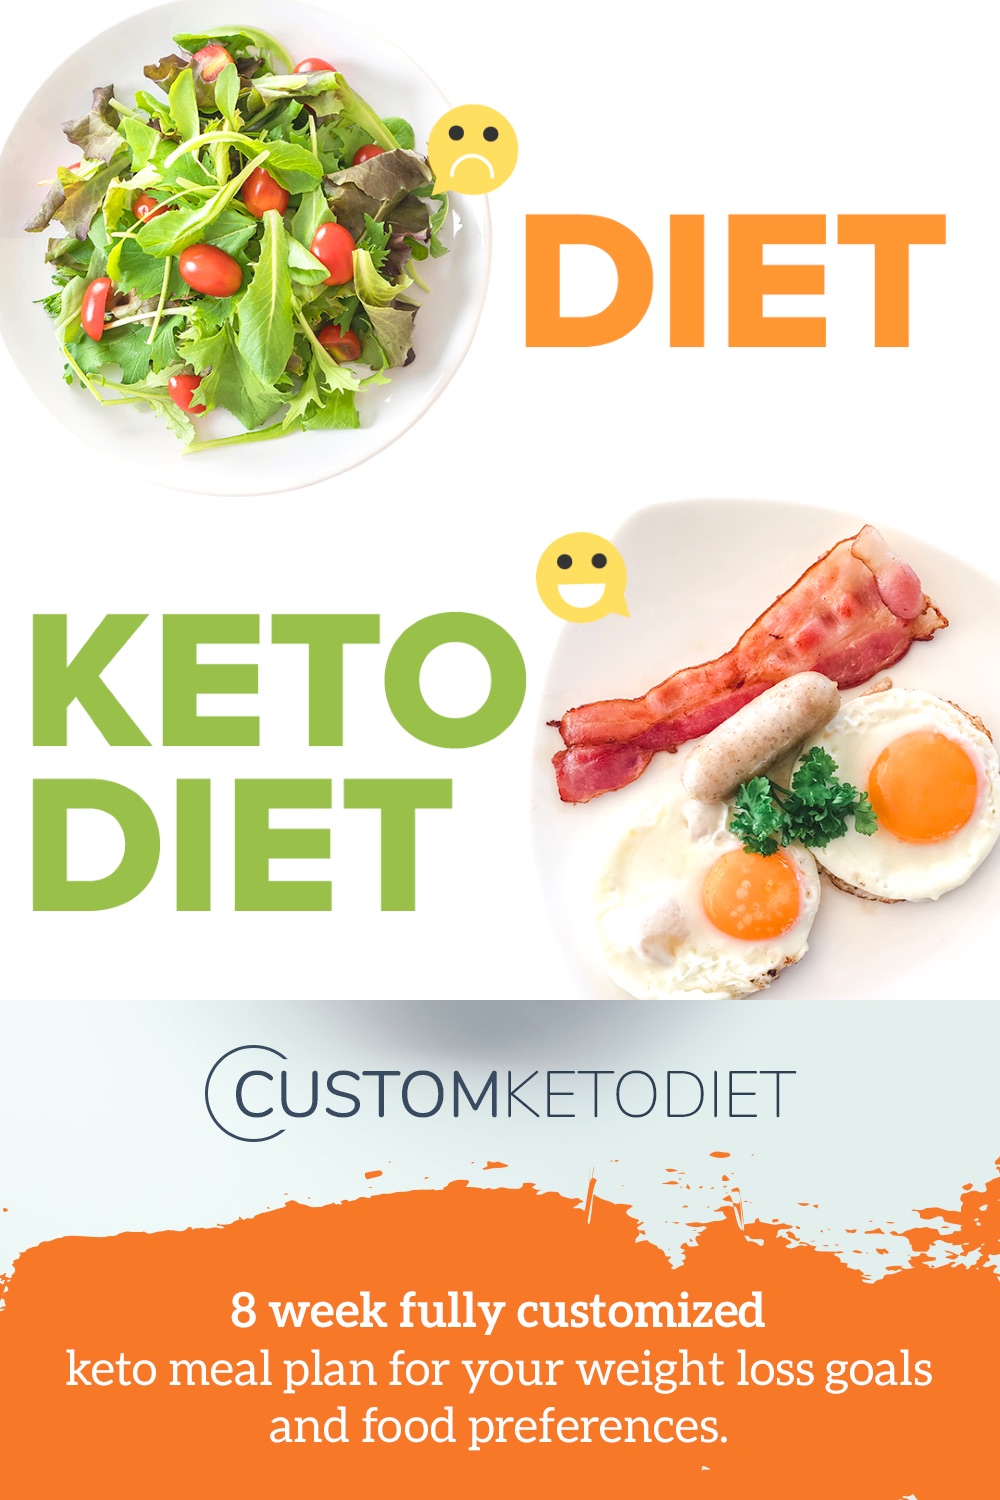 does the custom keto diet work